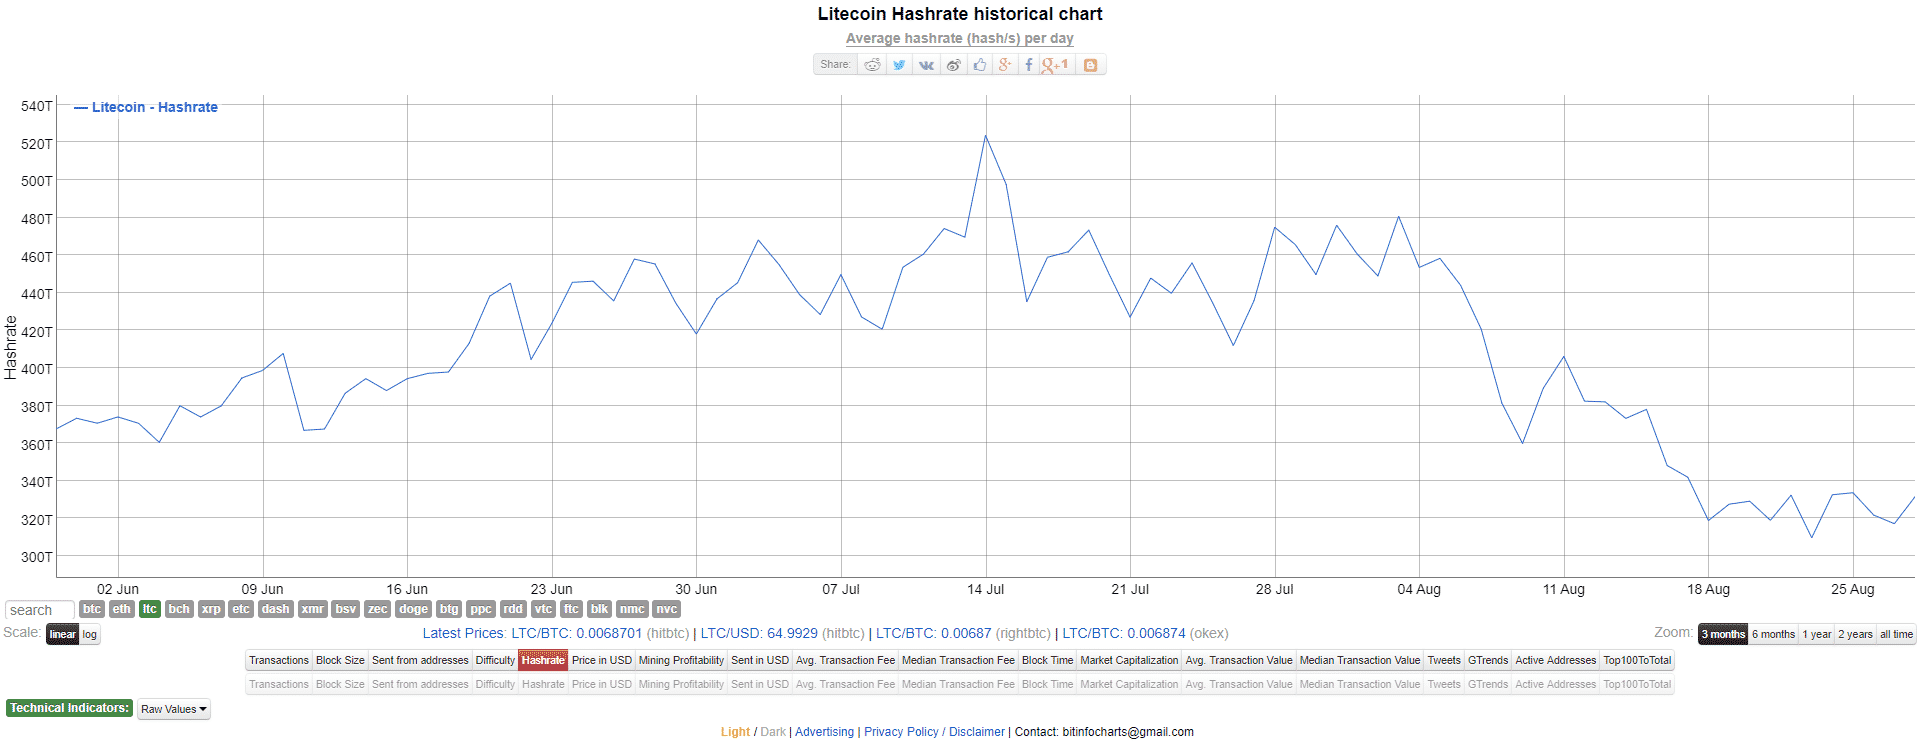 Litecoin Hashrate historical chart